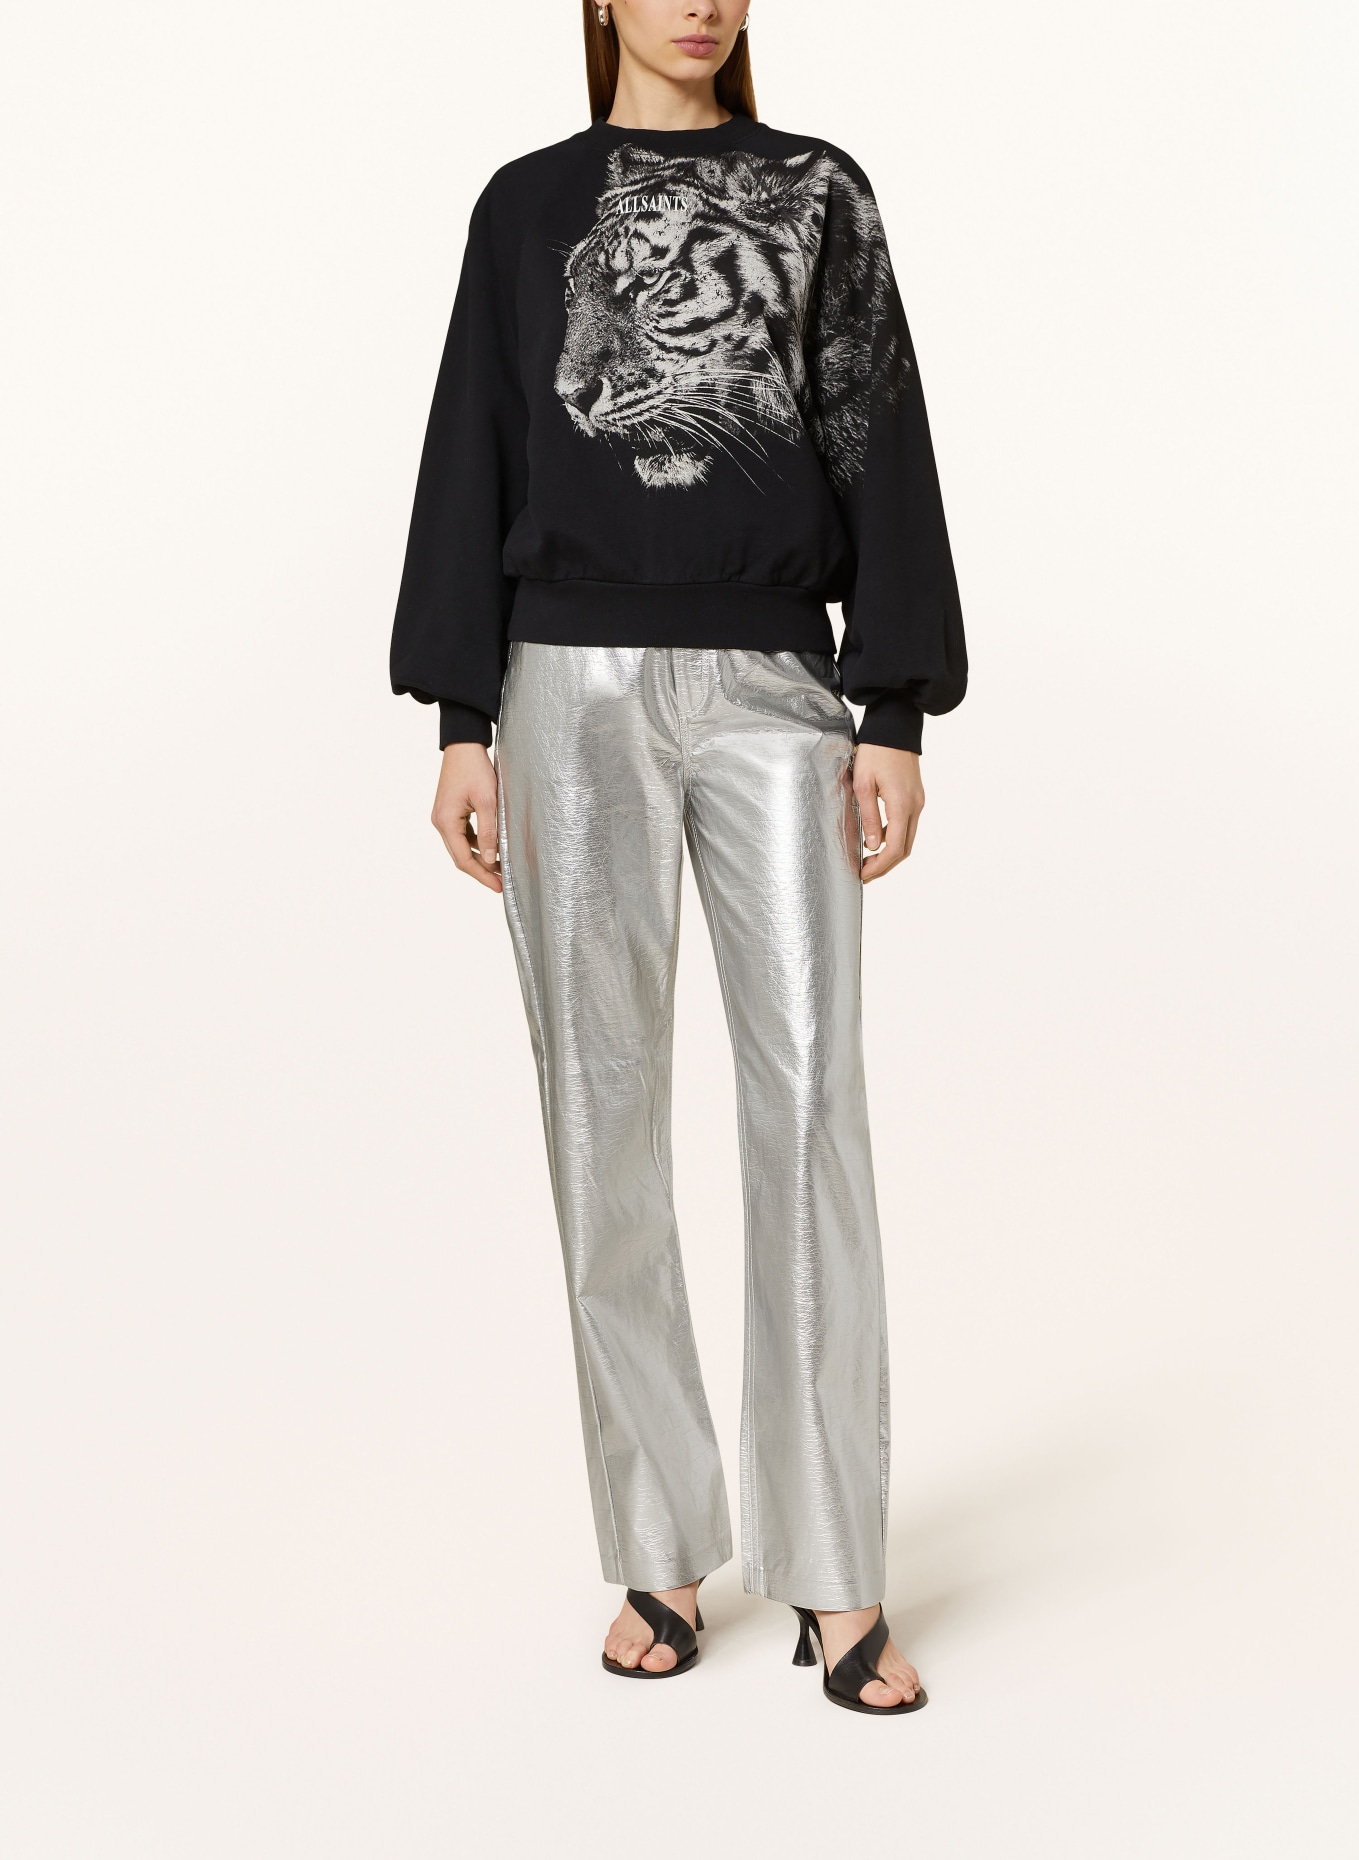 ALLSAINTS Sweatshirt TIGRESS CYGNI with cut-out, Color: BLACK/ WHITE/ GRAY (Image 2)